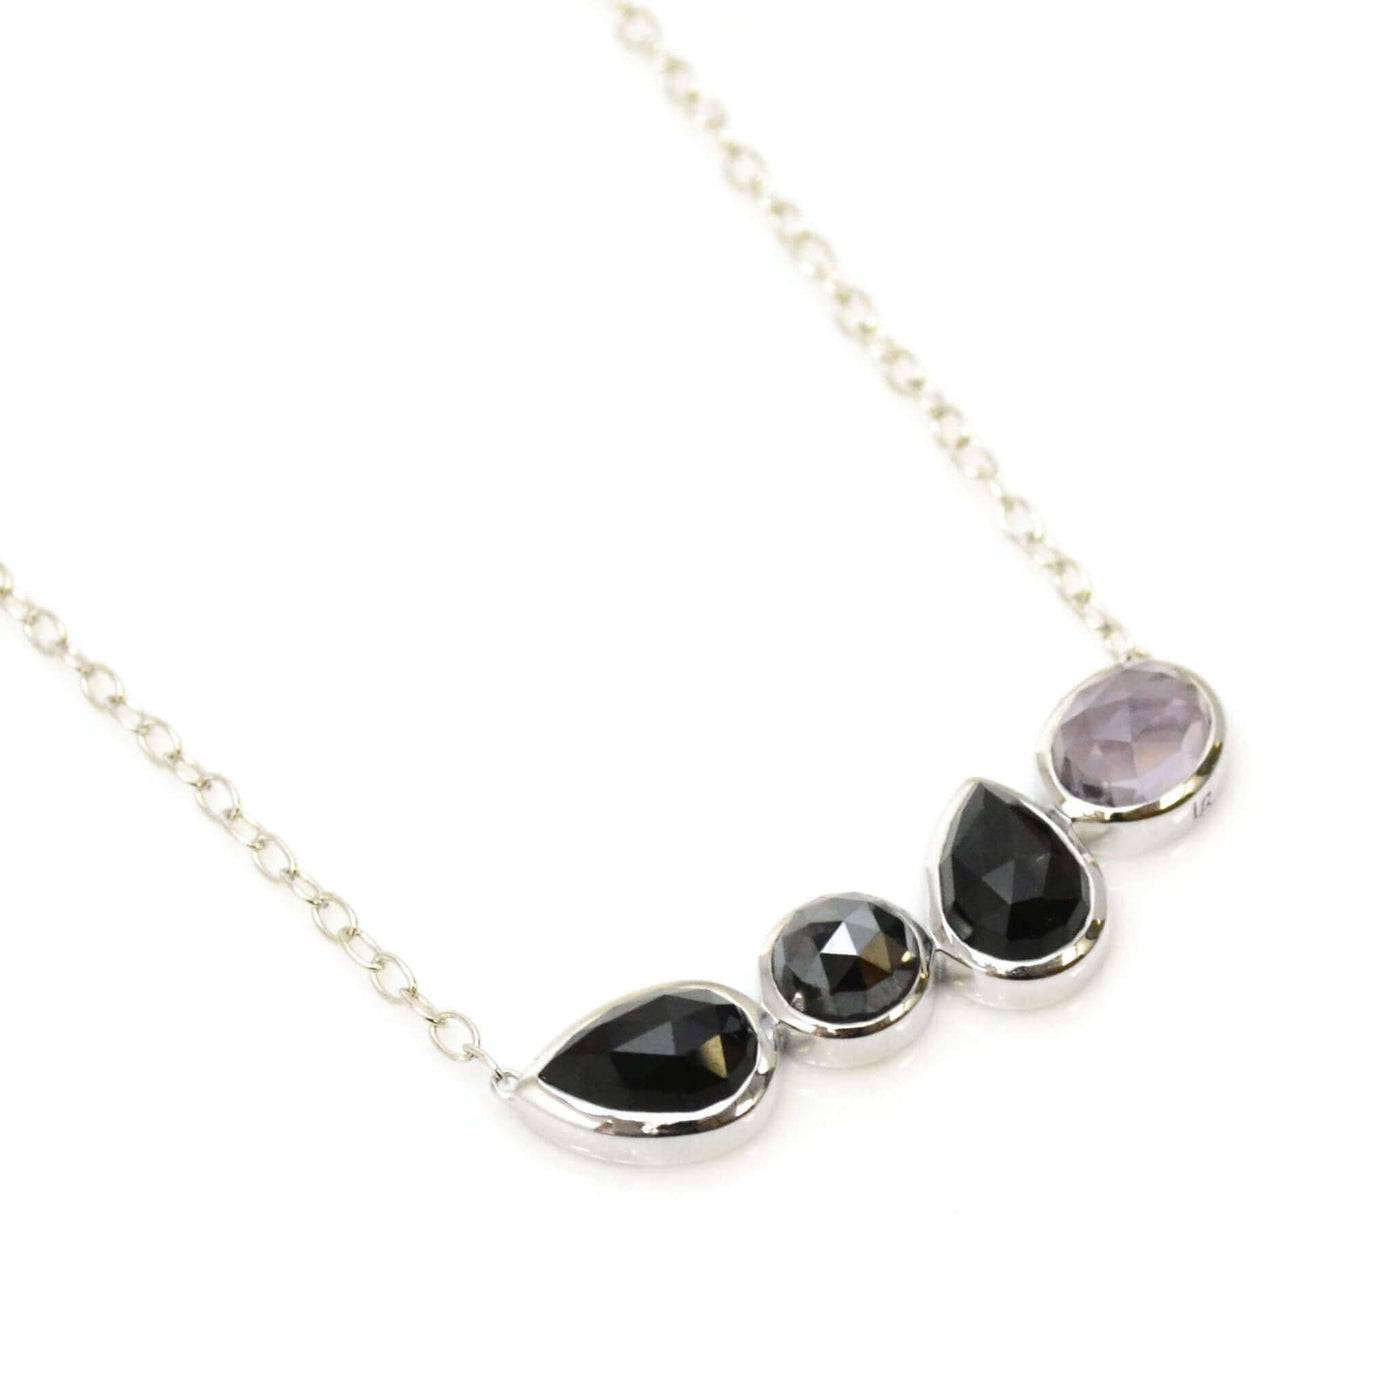 Gemstone Necklace | Lisa Robin